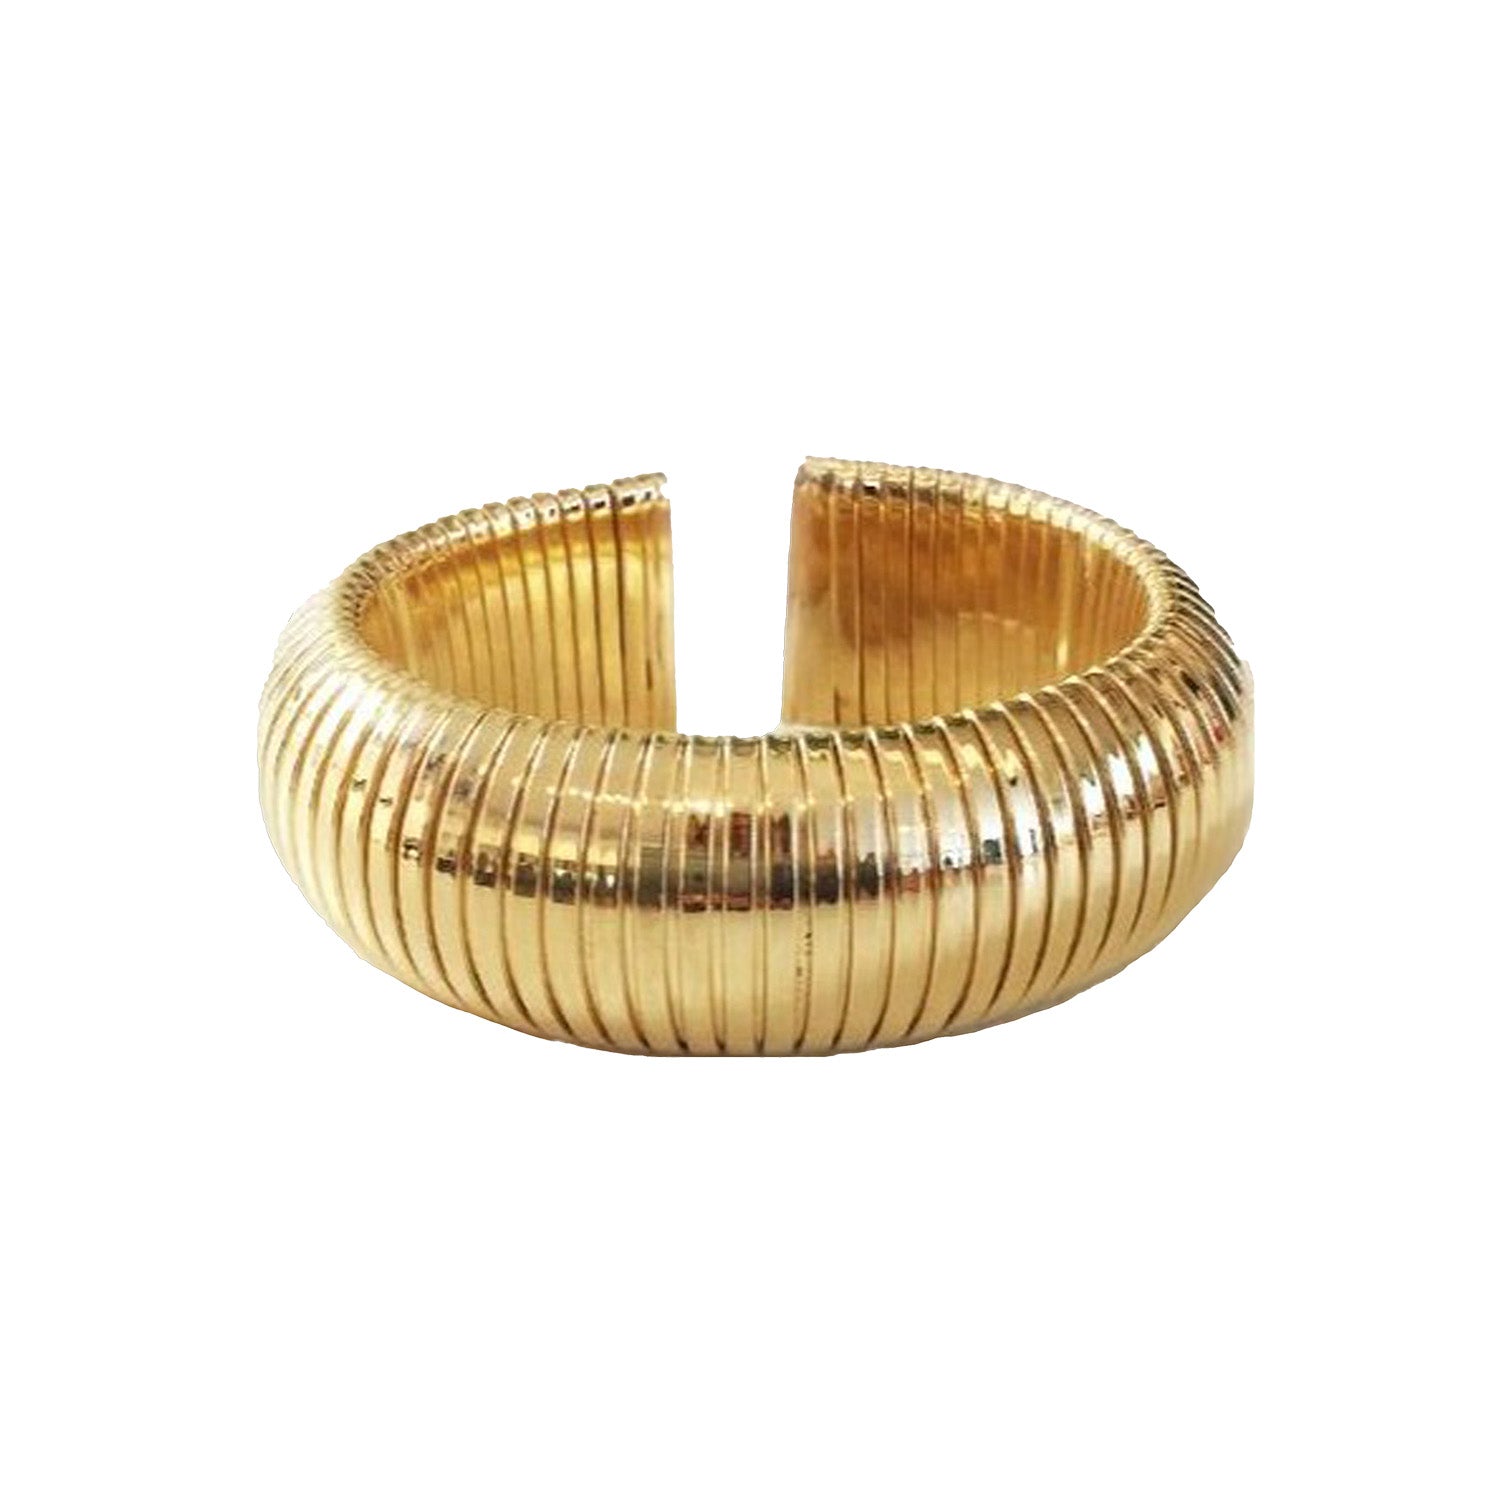 Gold Double Pearl Delicate Cuff Bracelet